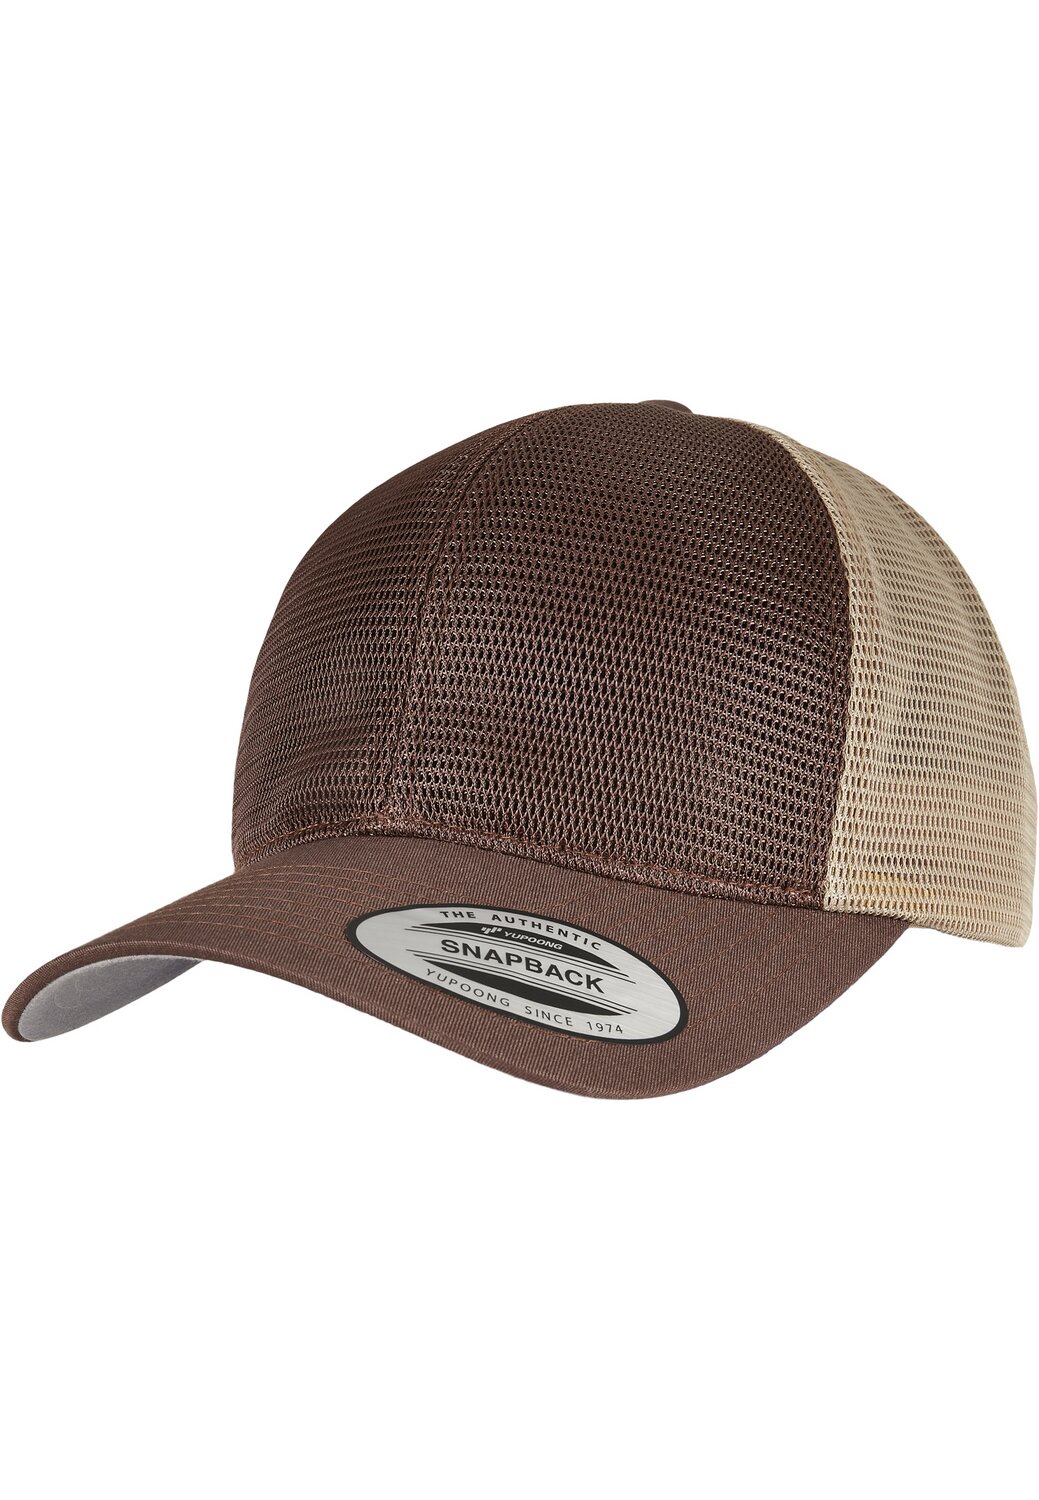 Baseball Cap MAXISCOOT Omnimesh | brown/khaki 2-Tone 360° Flexfit